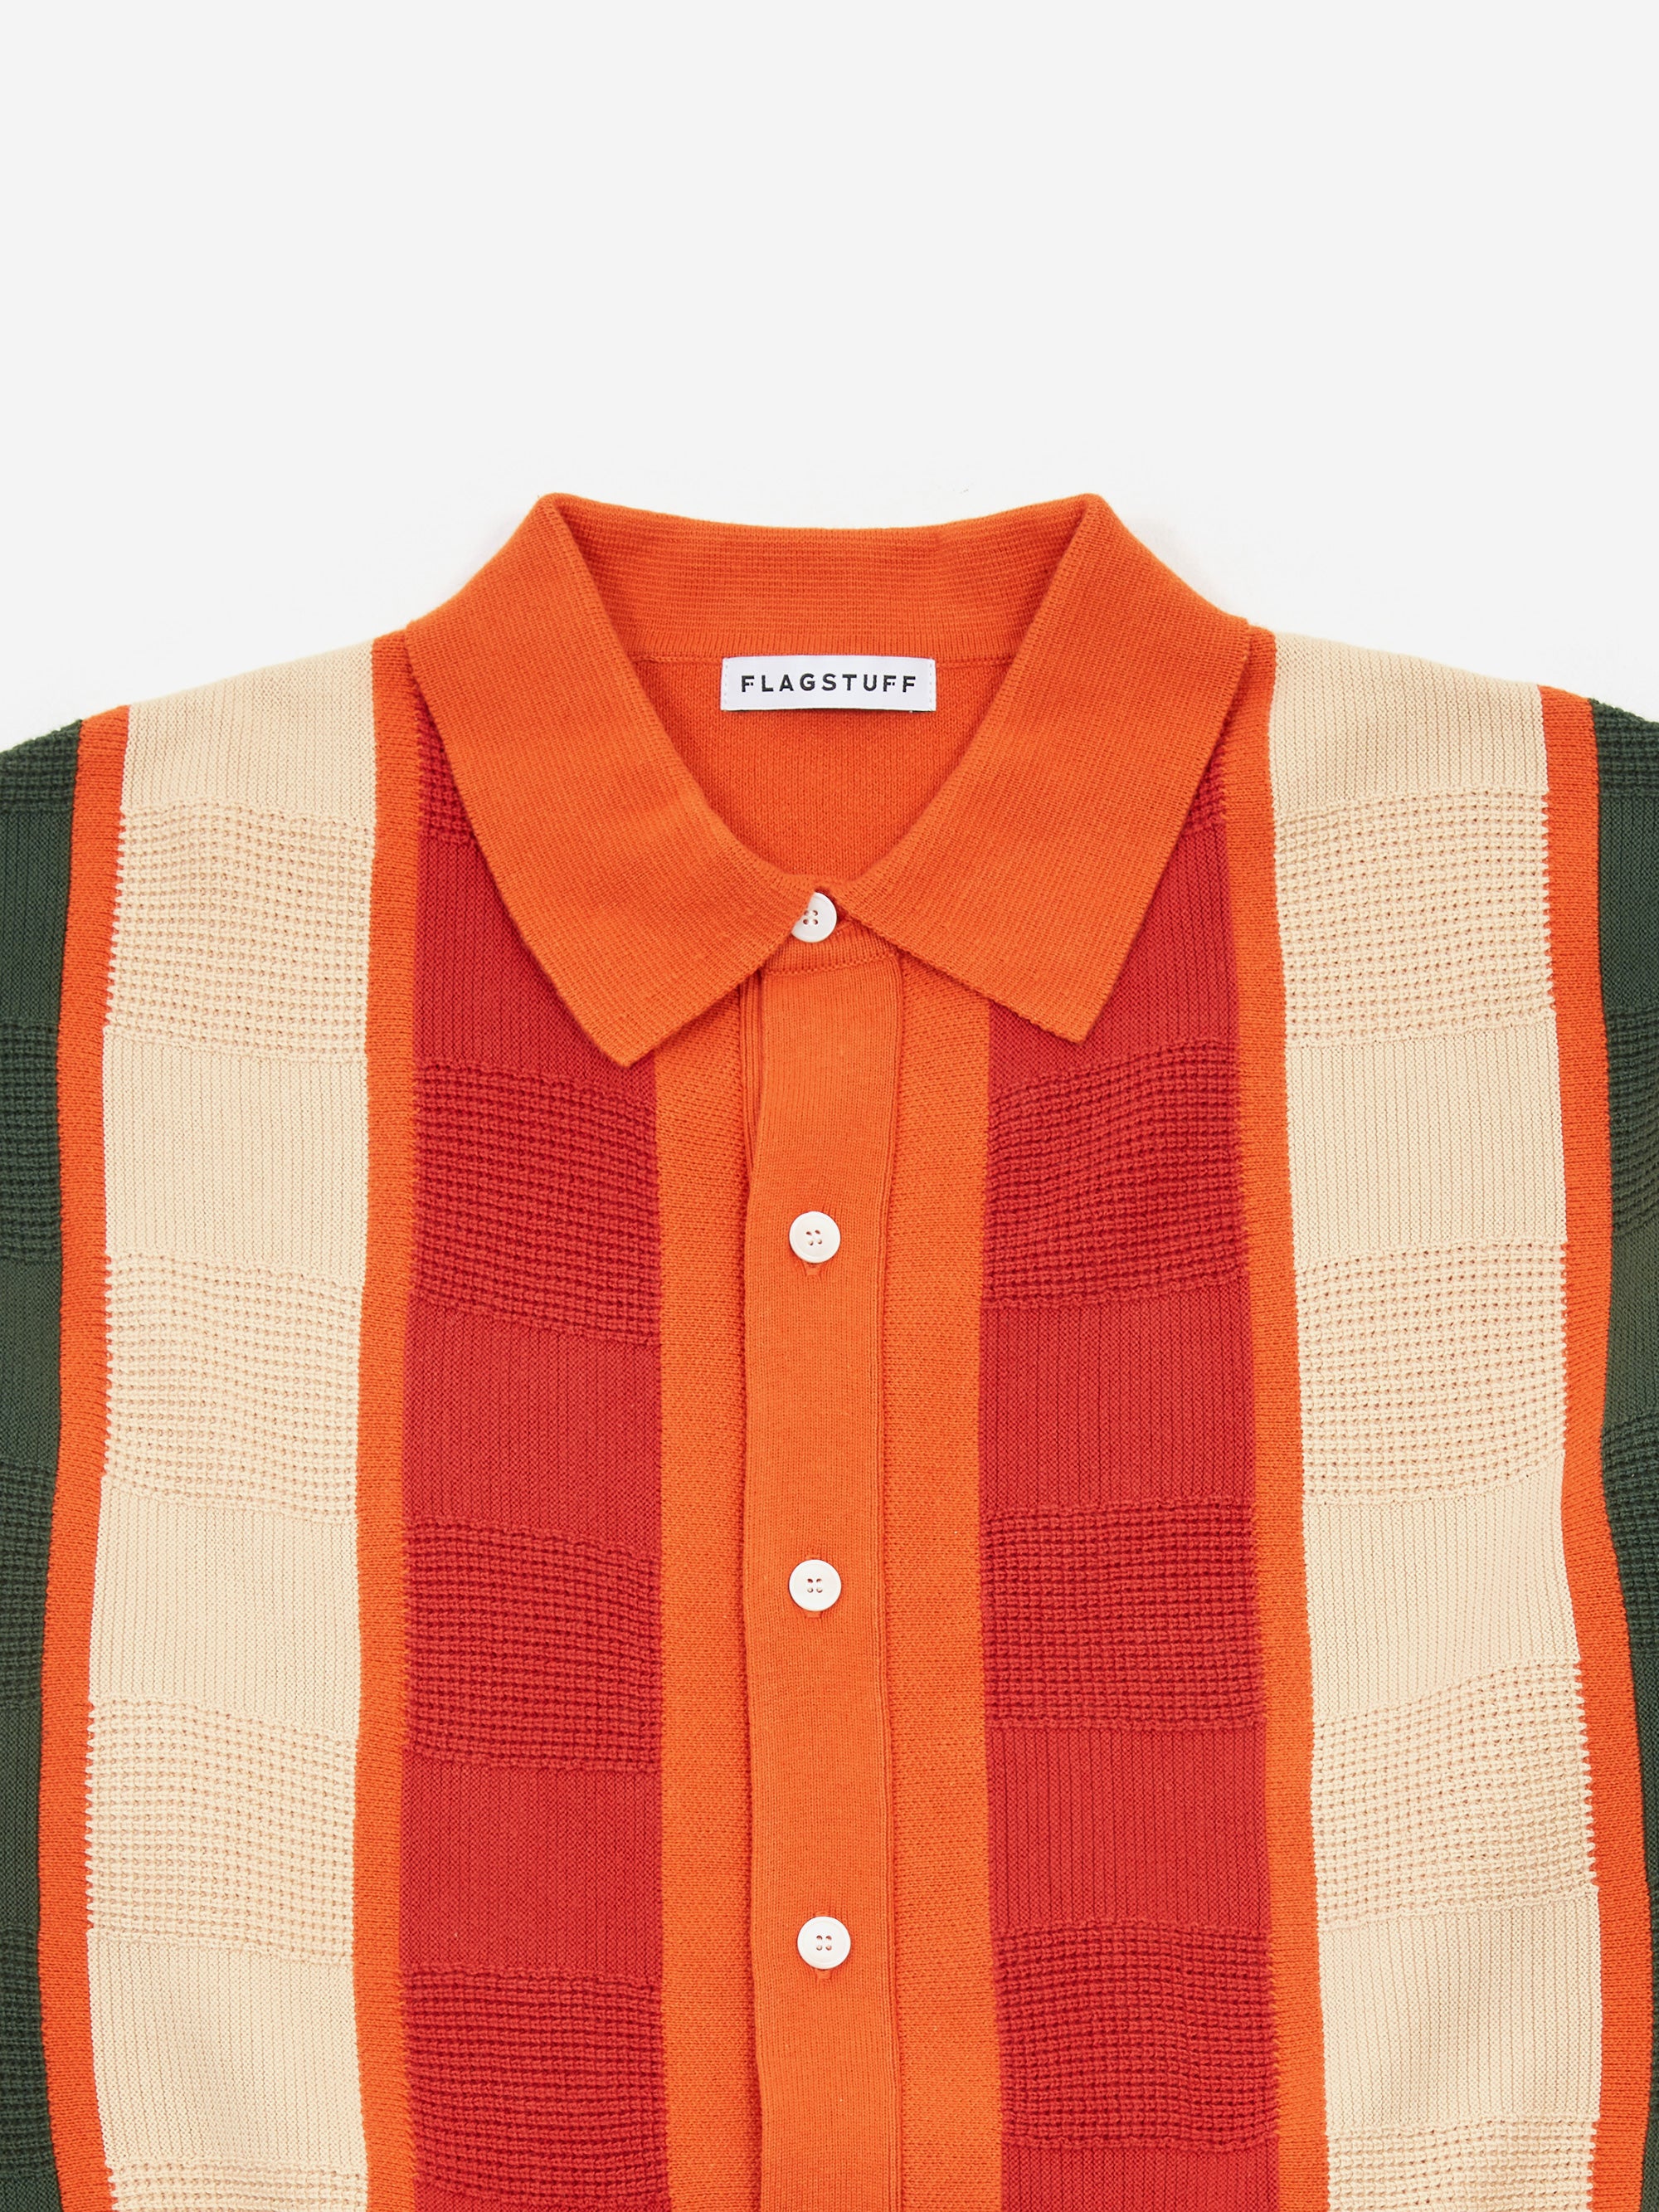 Flagstuff Stripe Knit Cardigan - Orange